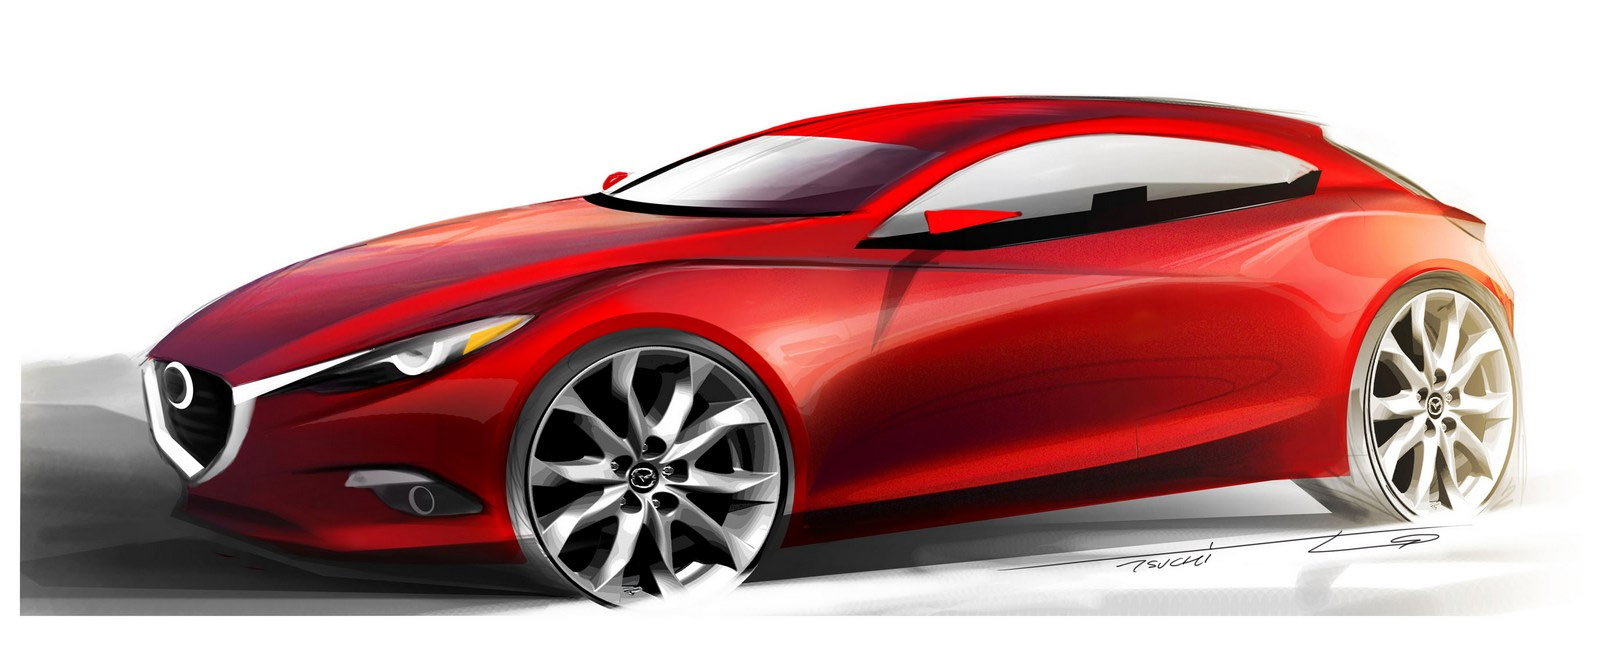 International, mazda 3 concept sketch: Mazda 3 Concept Menuju Tokyo, Pakai Mesin Tanpa Busi?